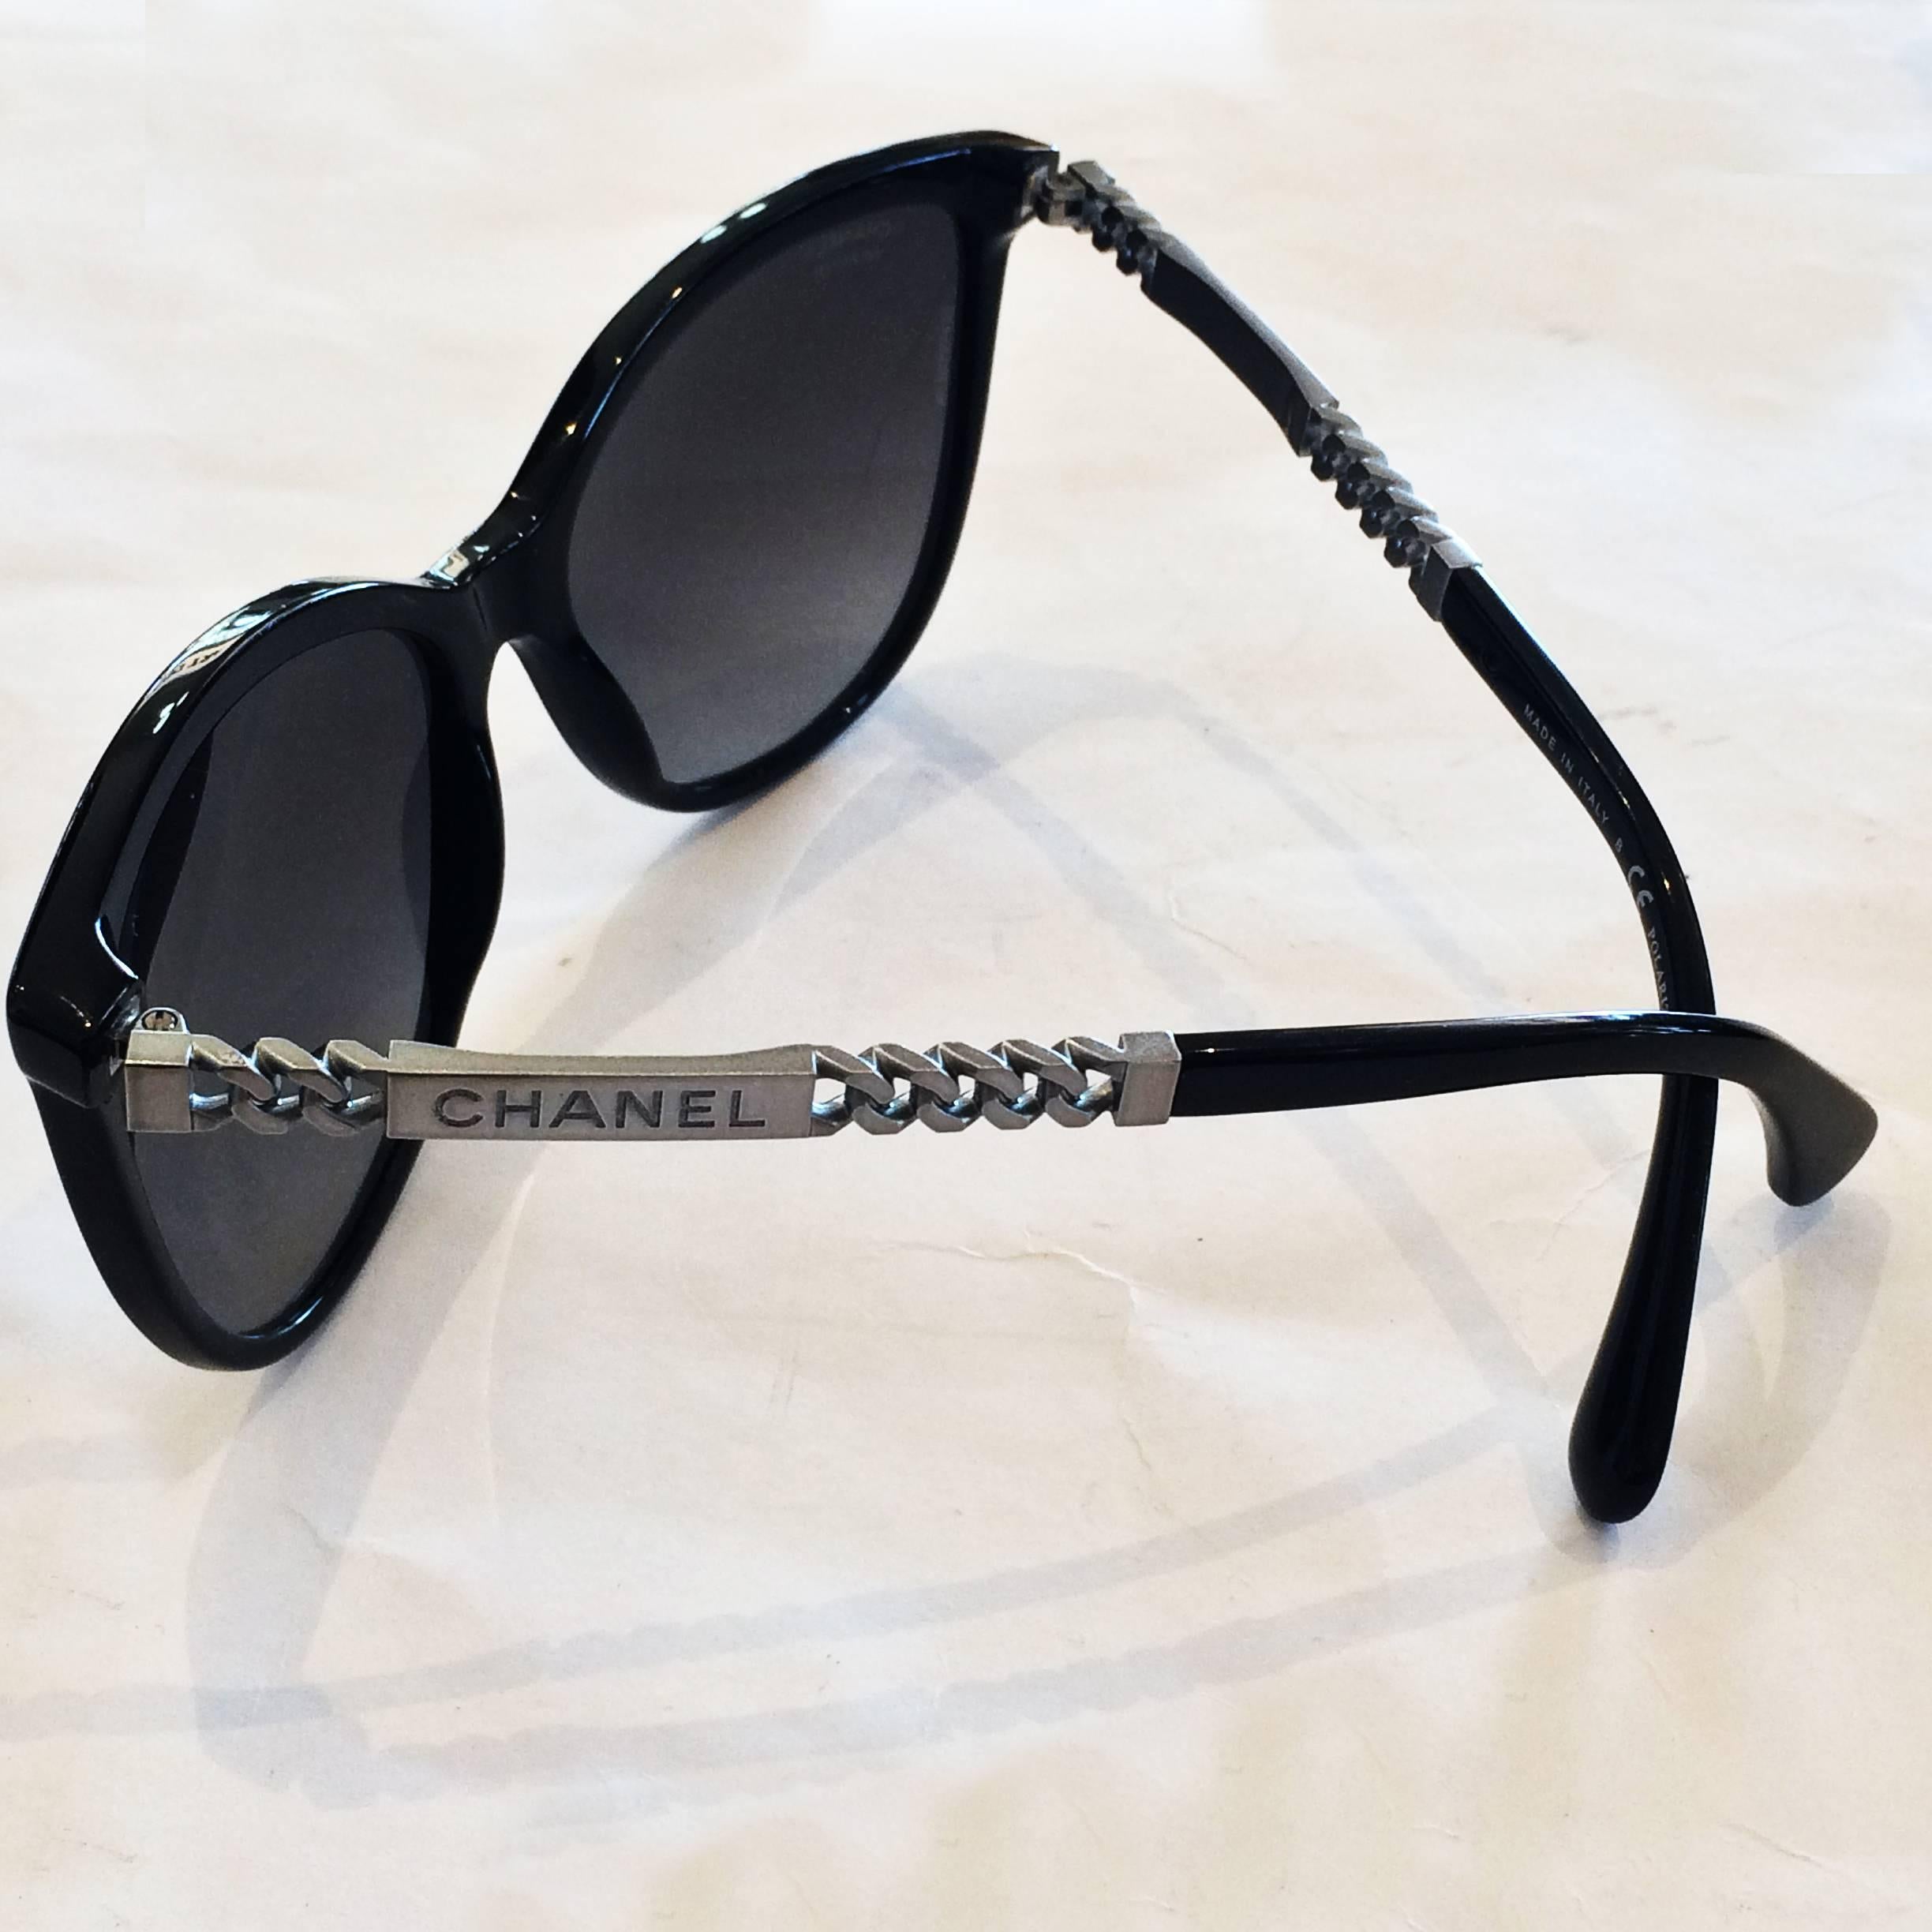 chanel 5352 sunglasses